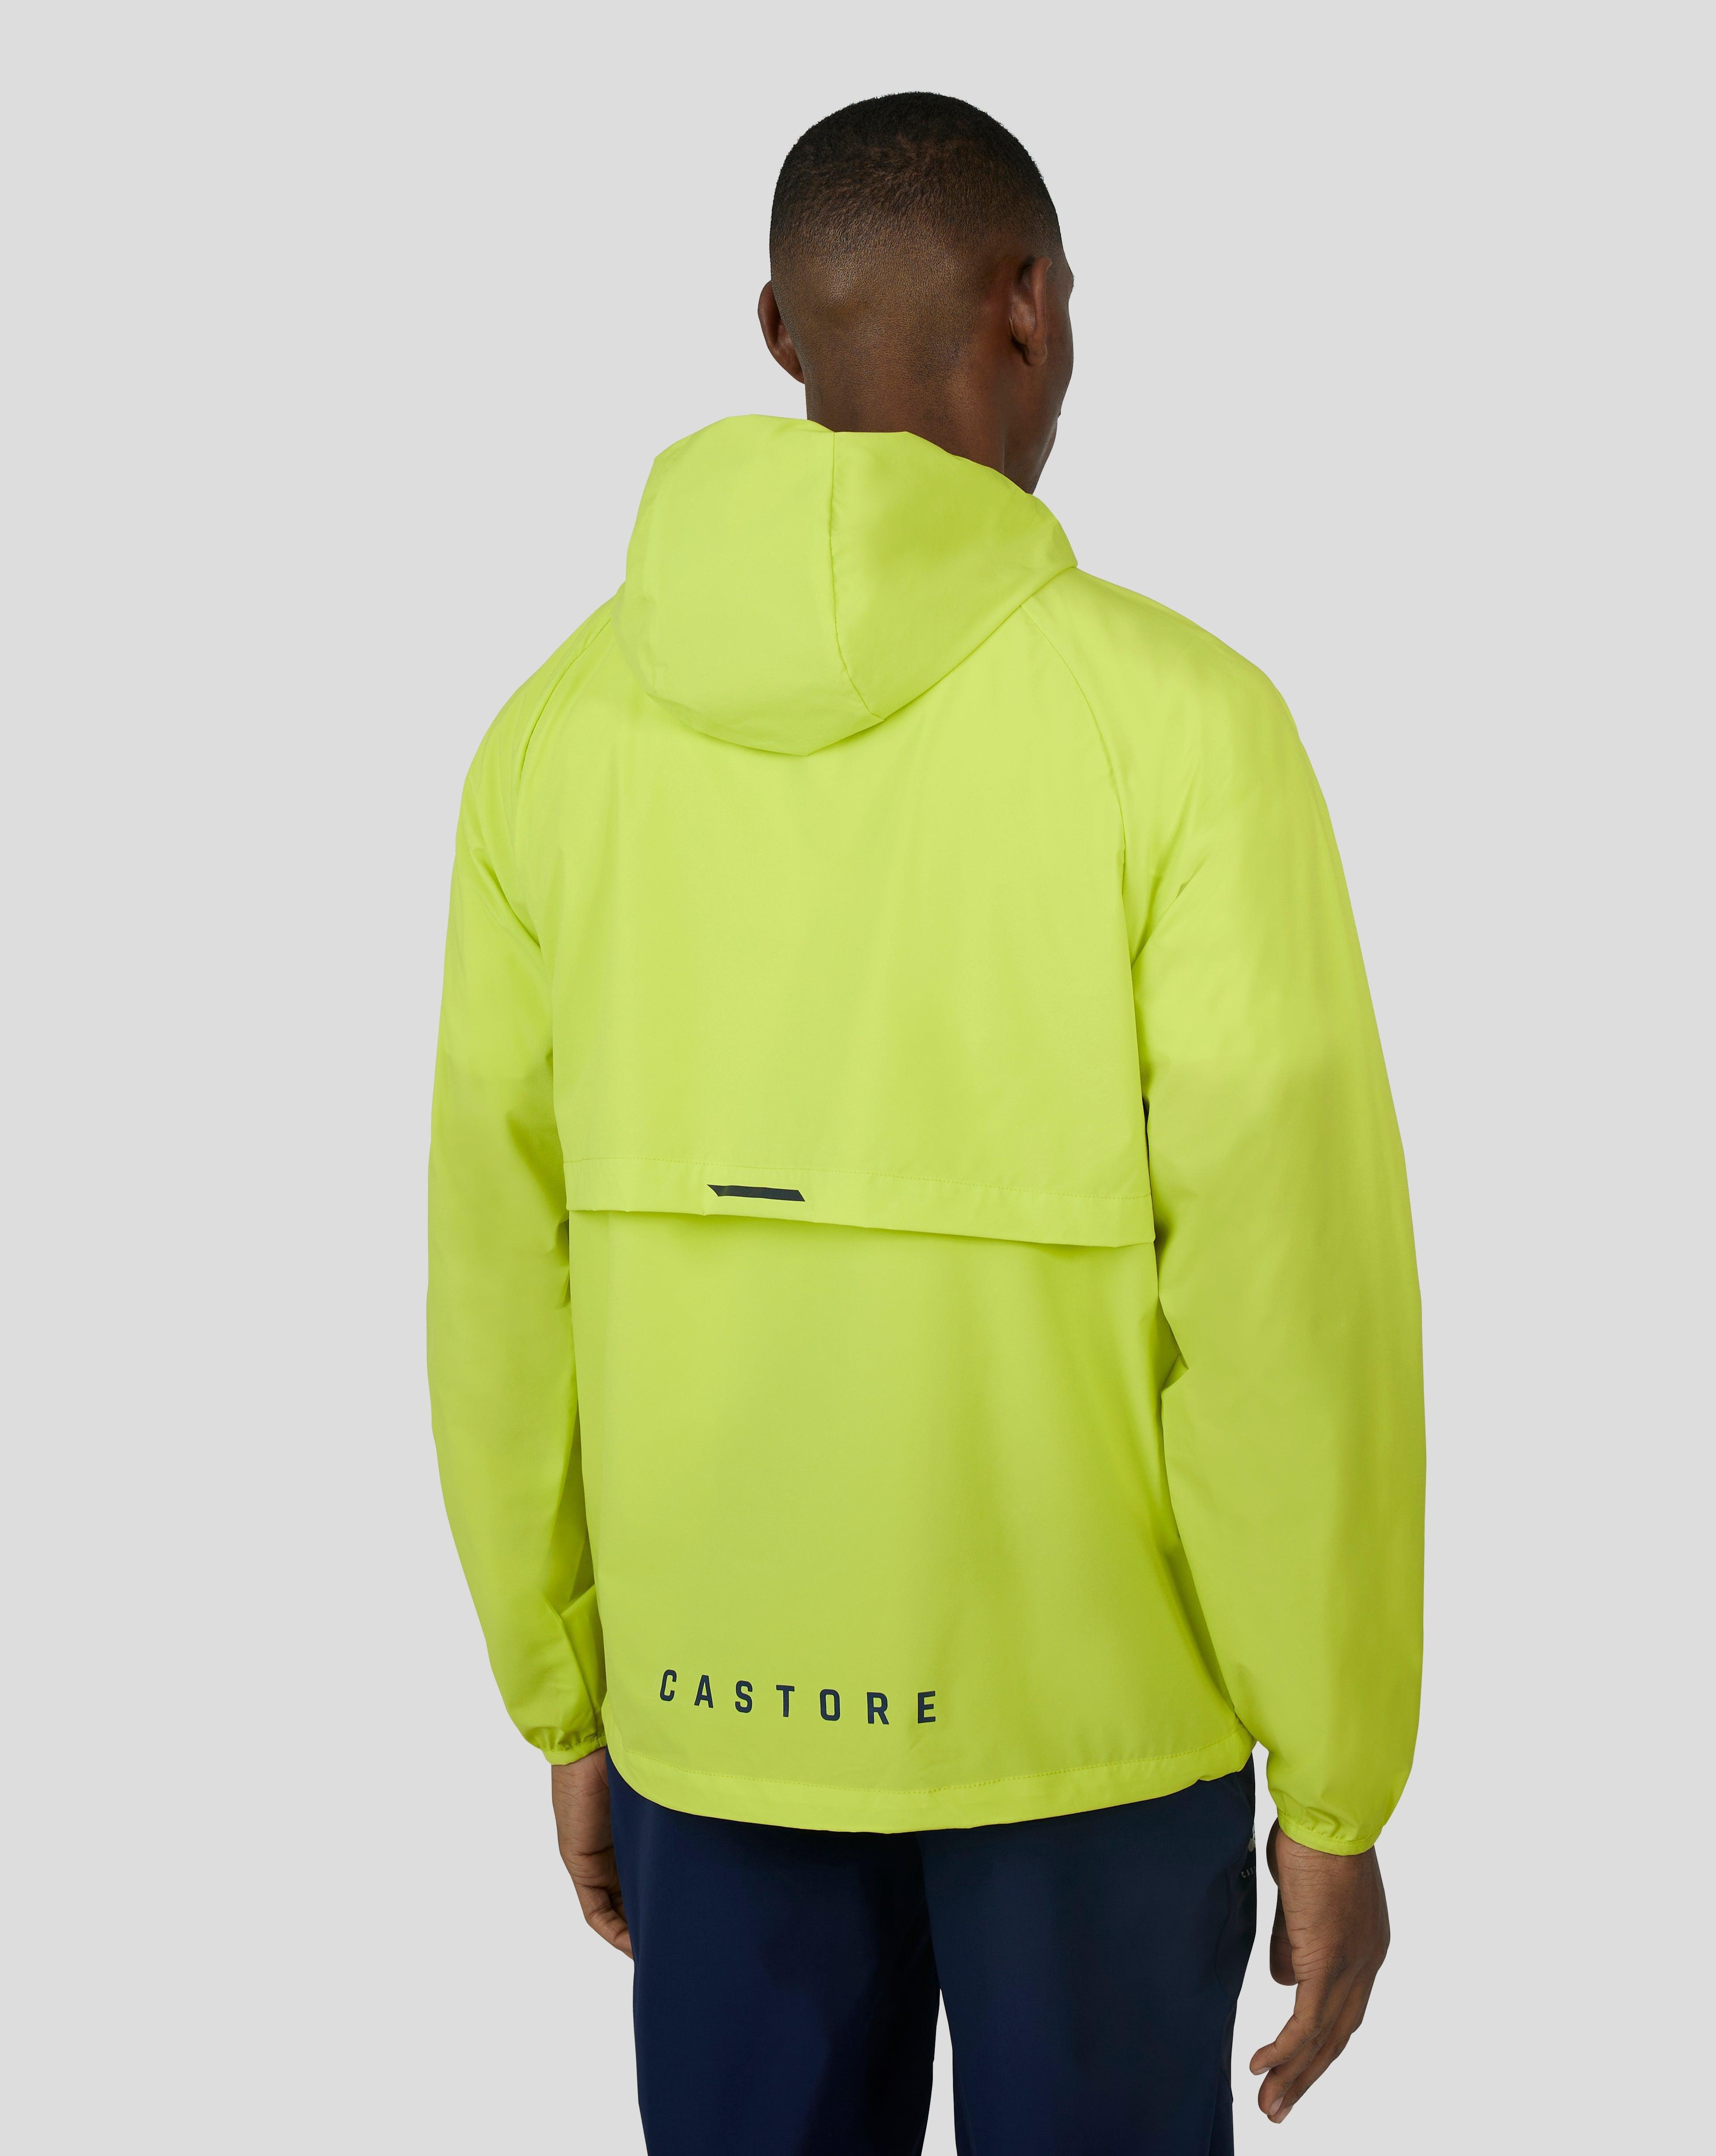 Castore - Yellow Flyweight Jacket